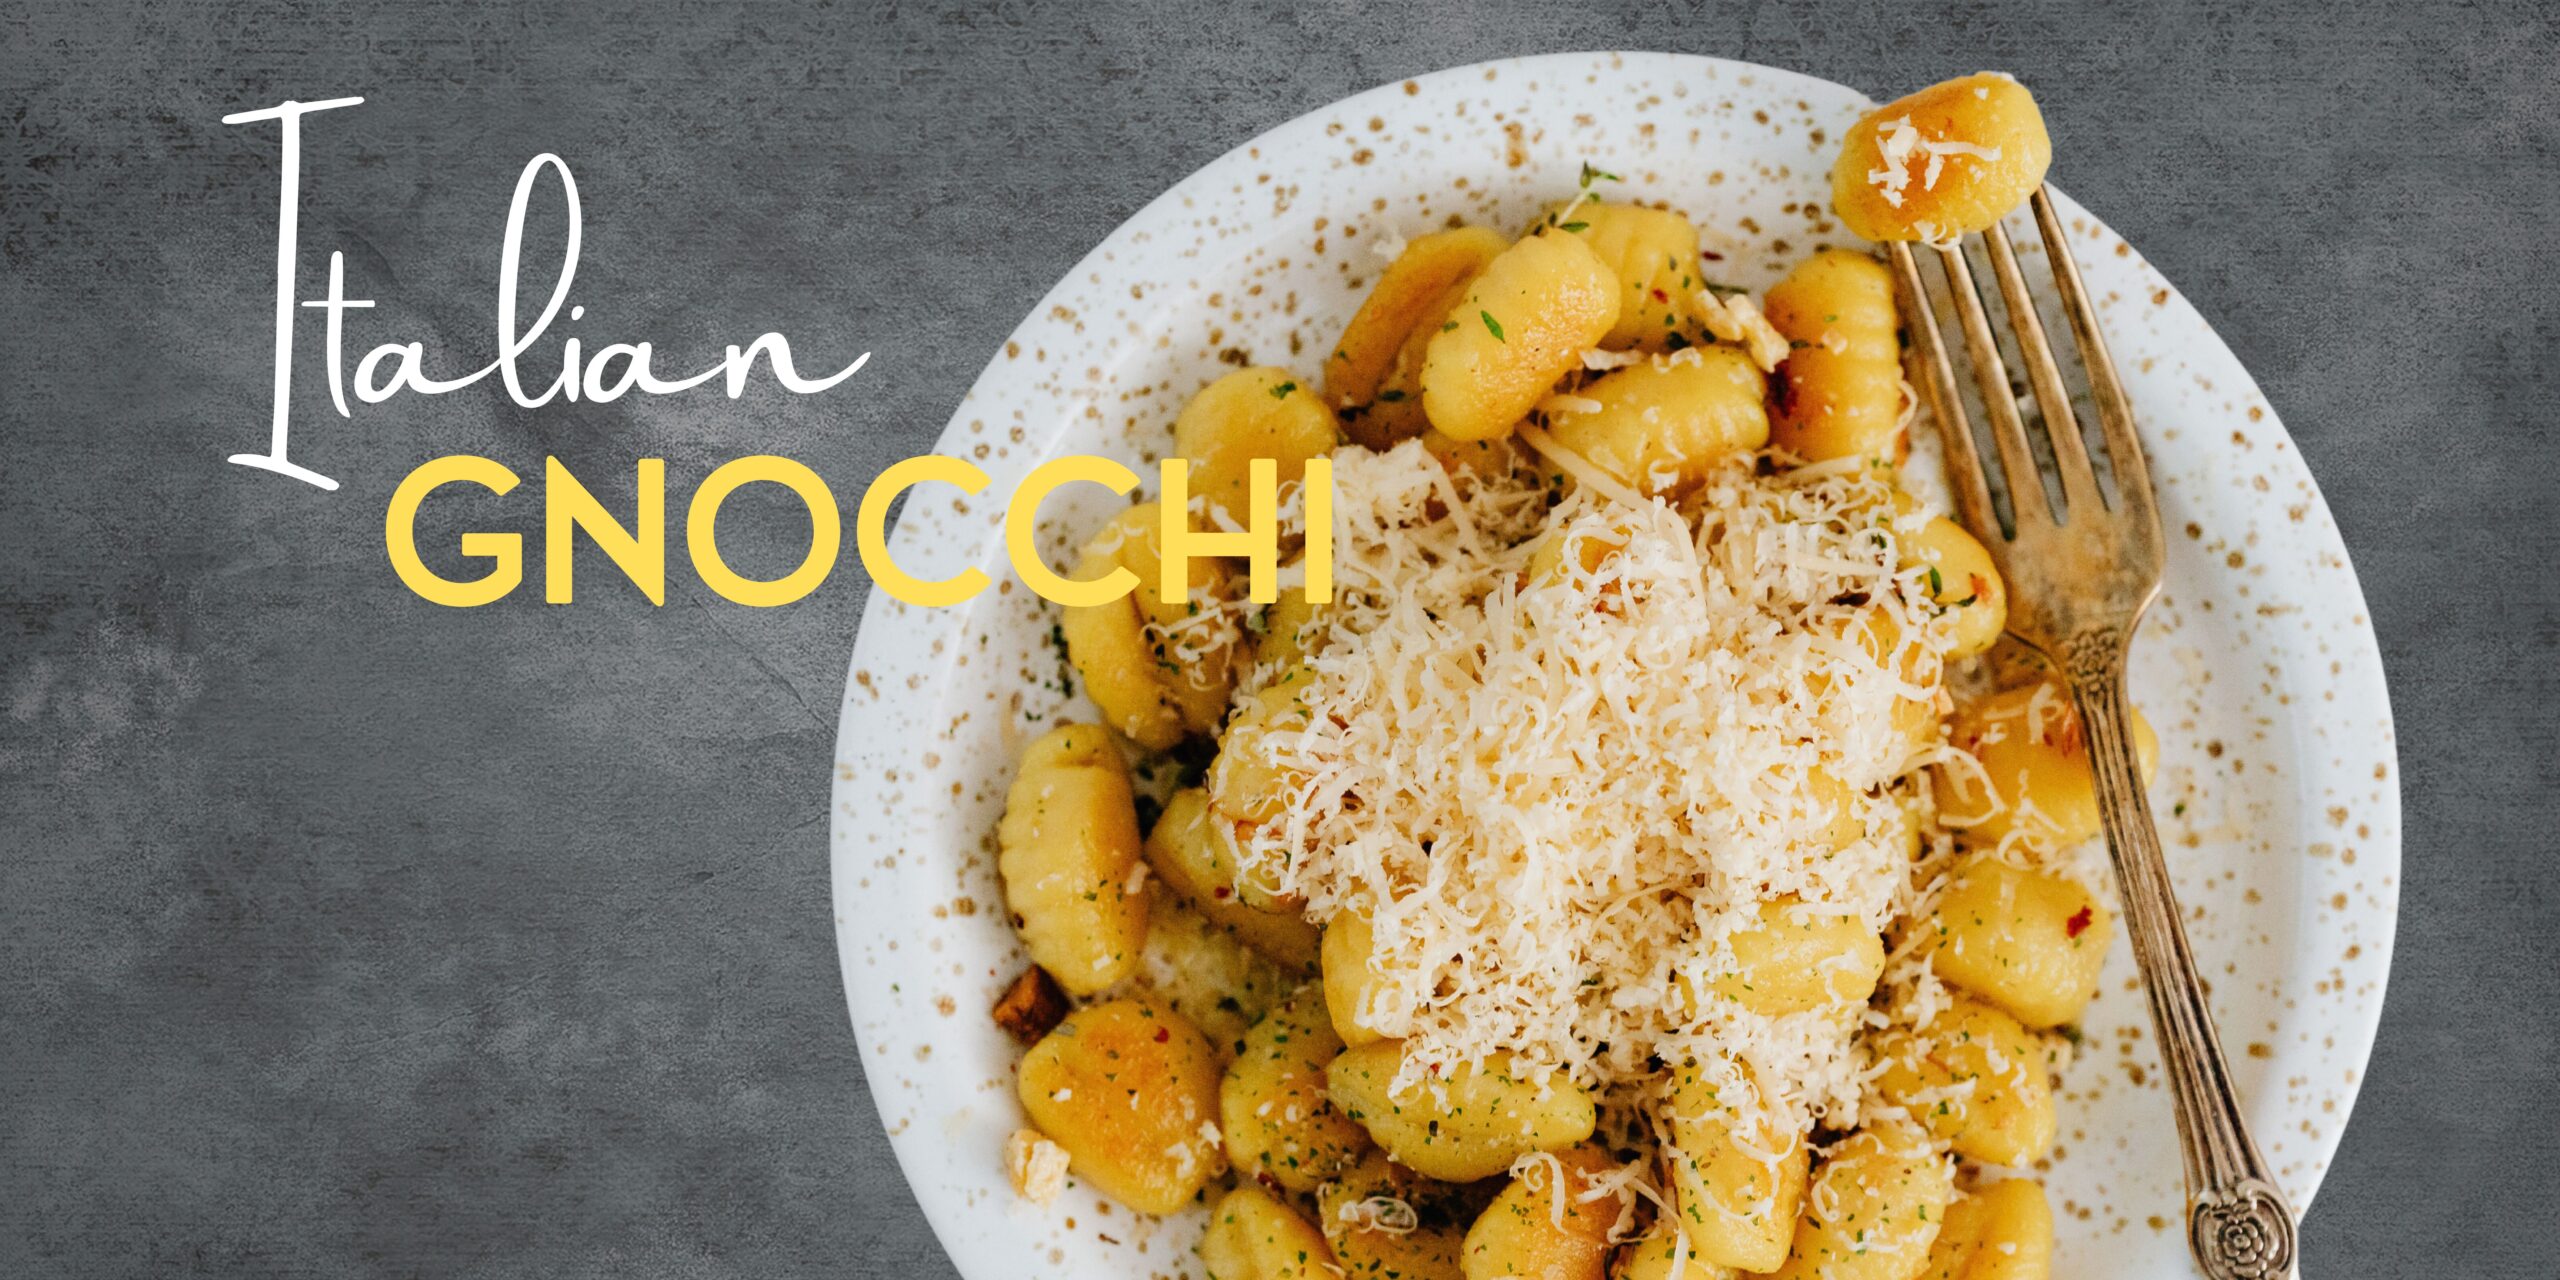 Italian Gnocchi covered in Parmesan